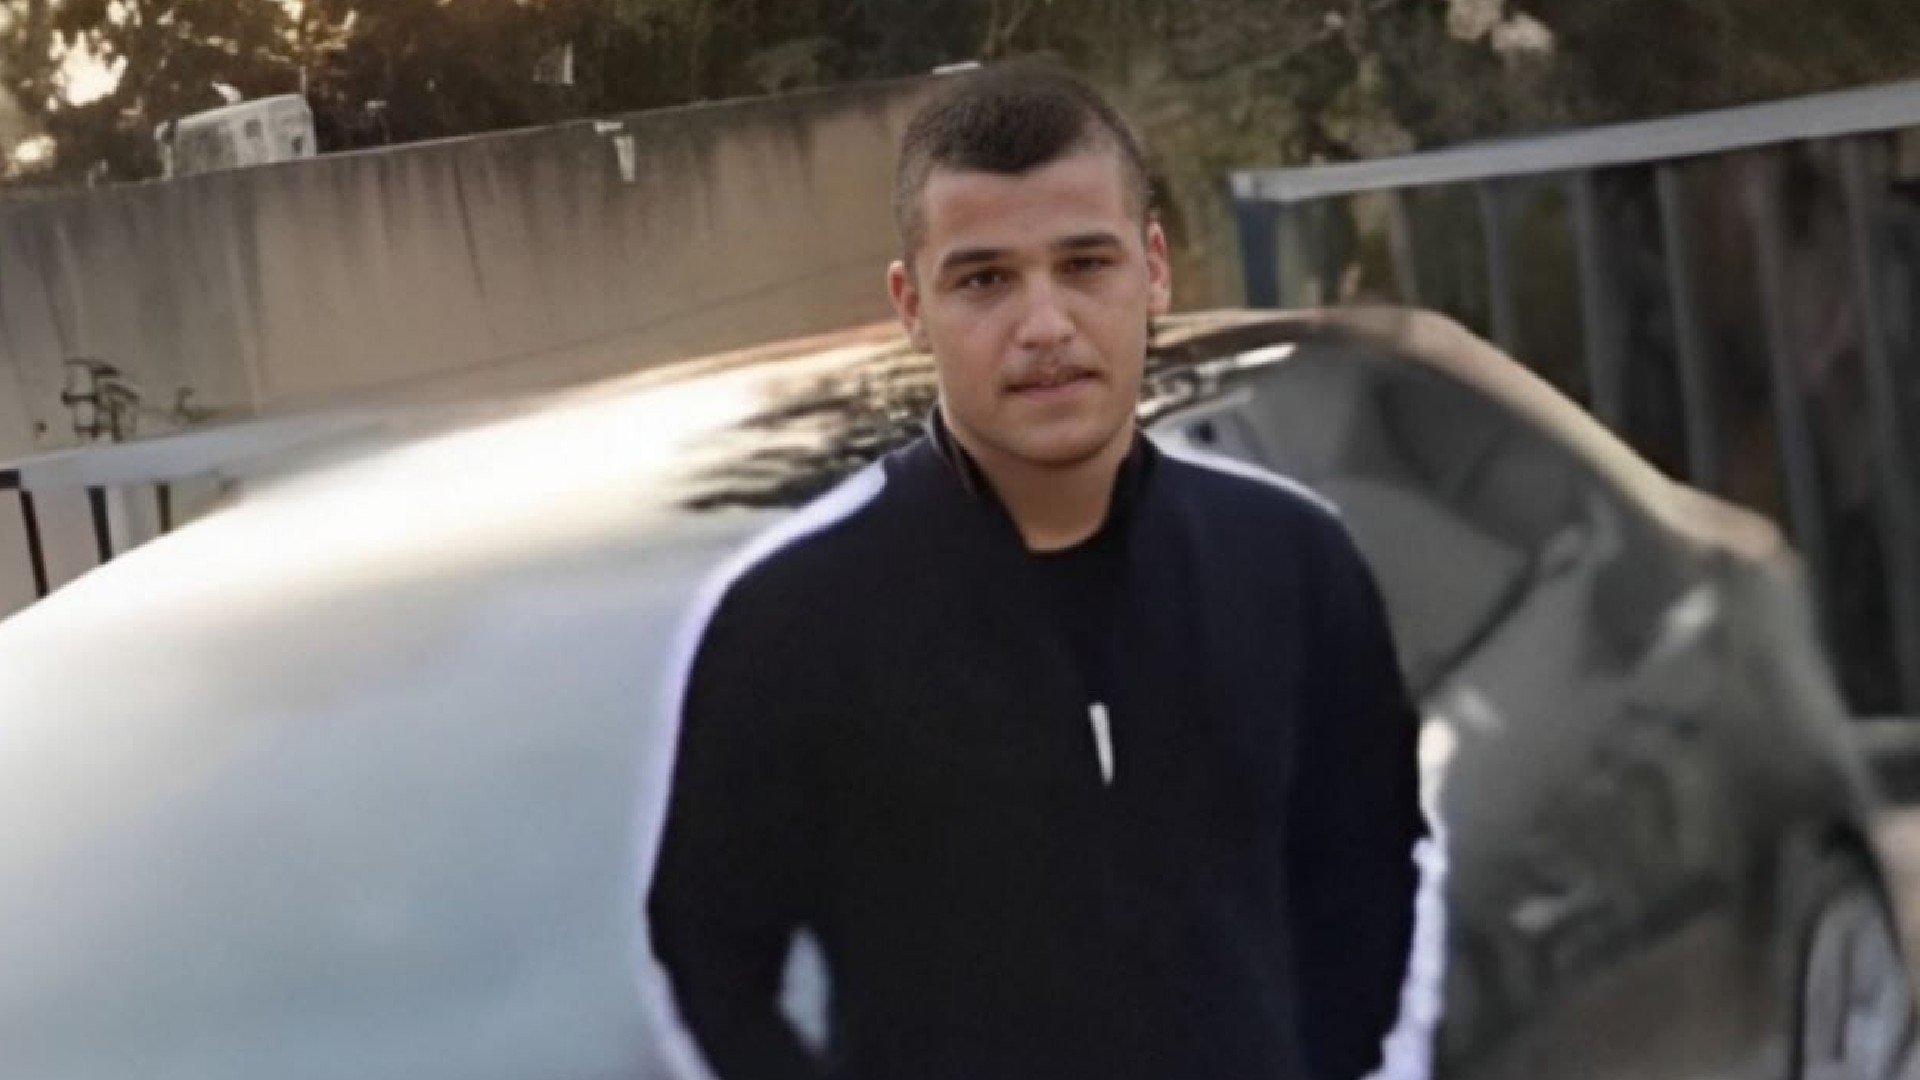 Diyar Omri, 19, was shot dead on 6 May by an Israeli civilian after an apparent road rage brawl (Social media)